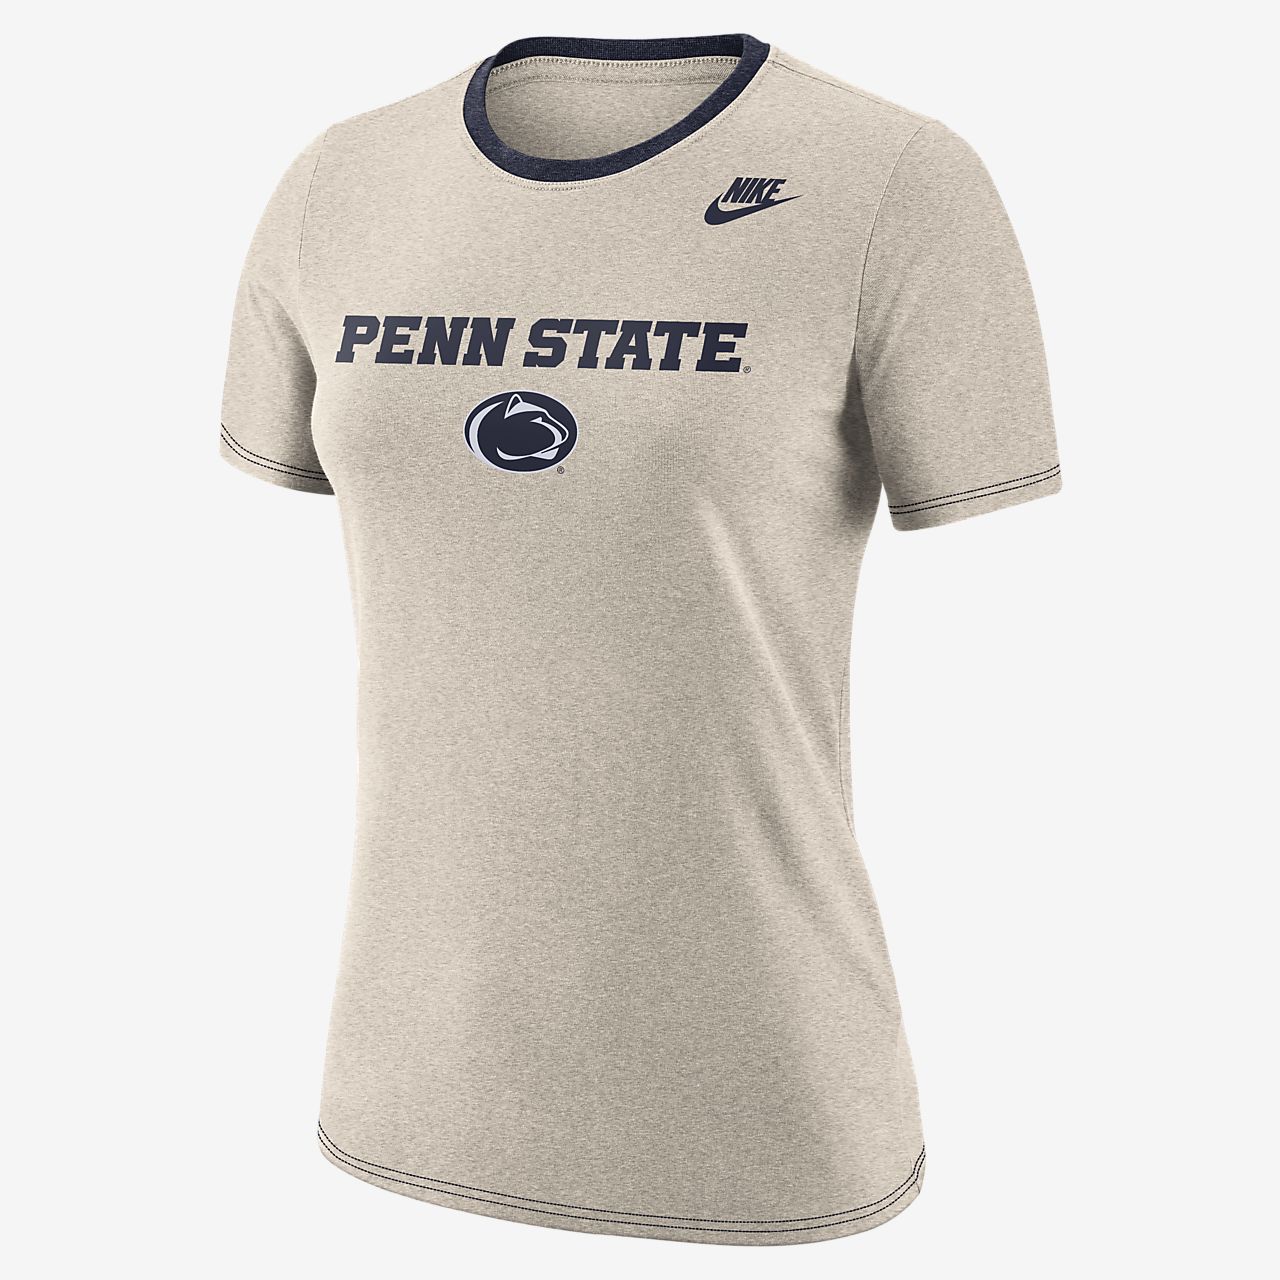 penn state women's shirts